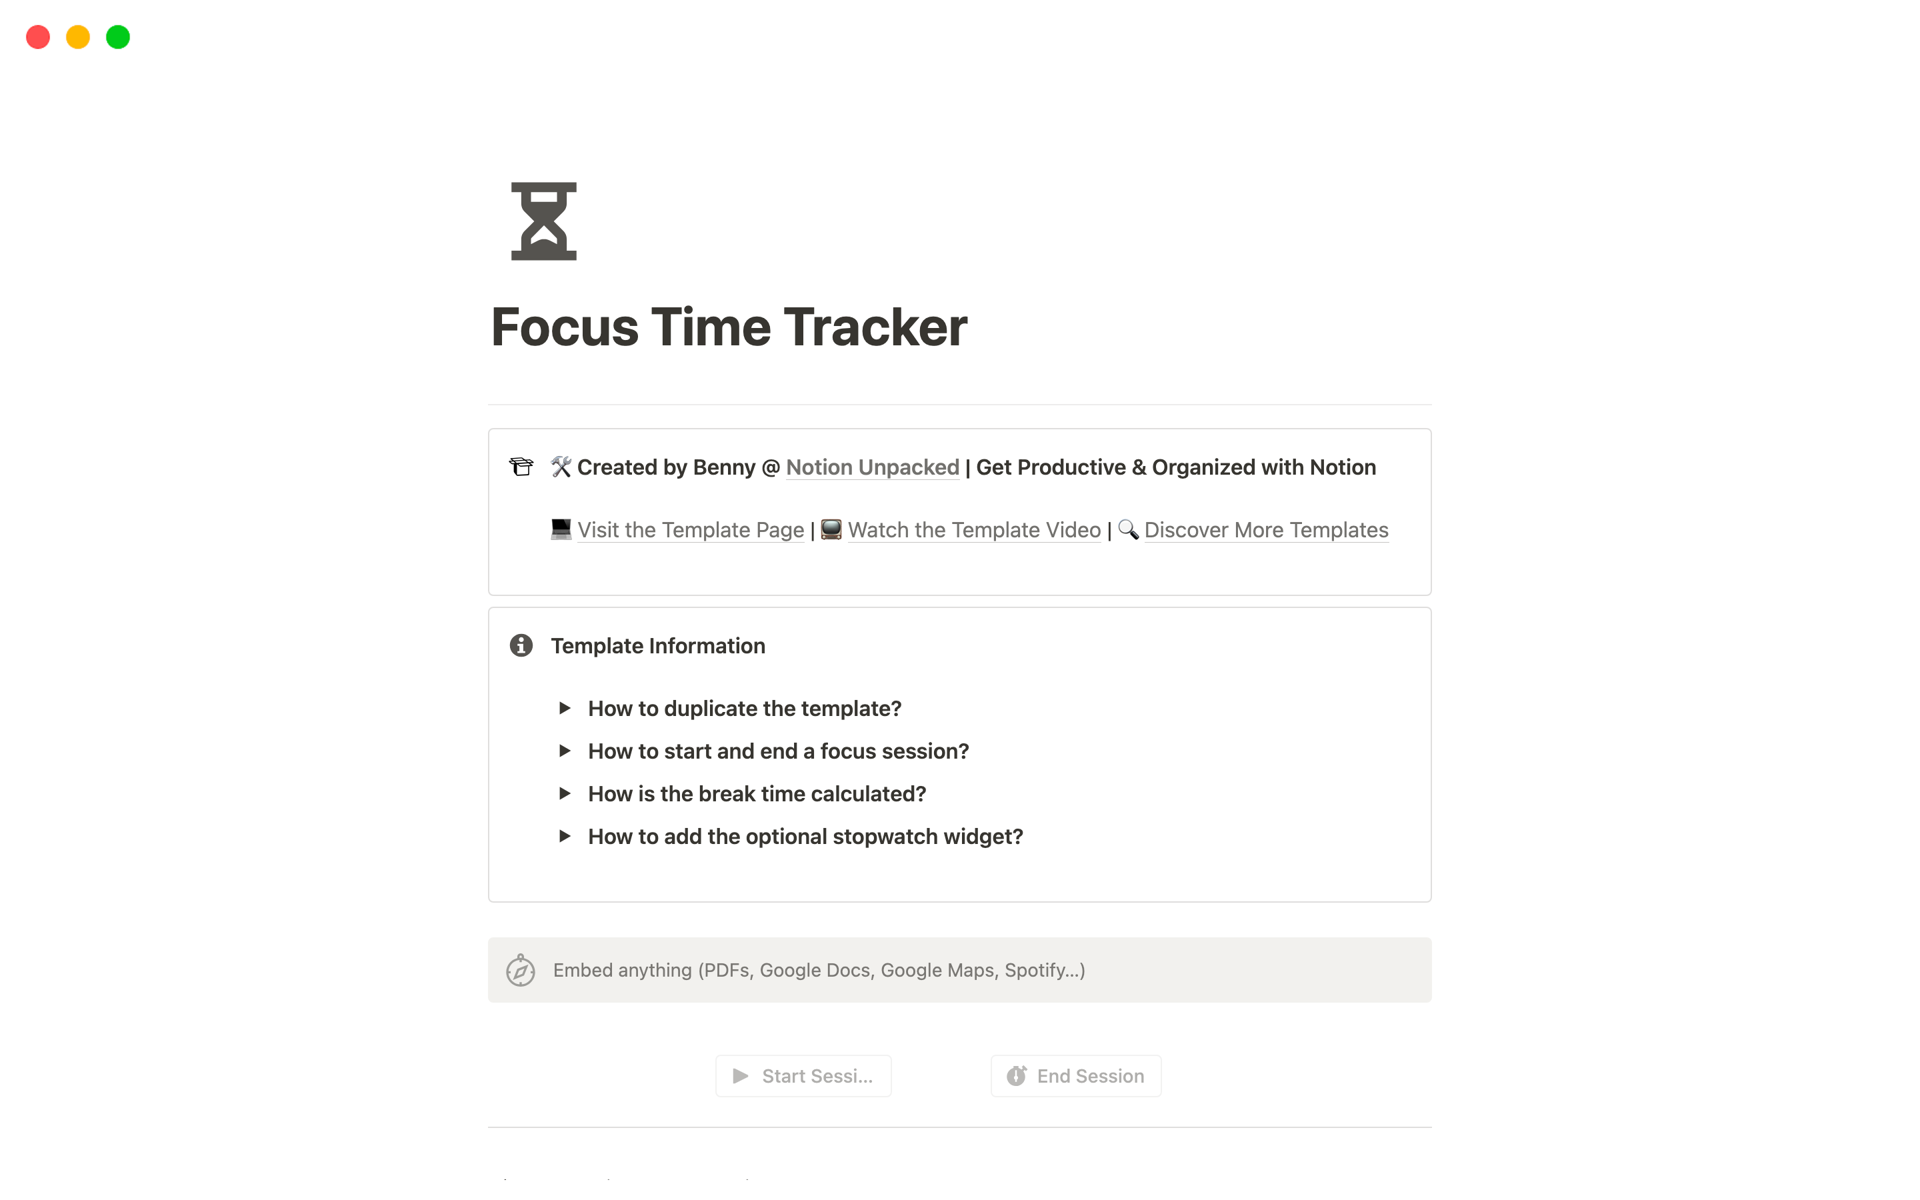 Aperçu du modèle de Focus Time Tracker